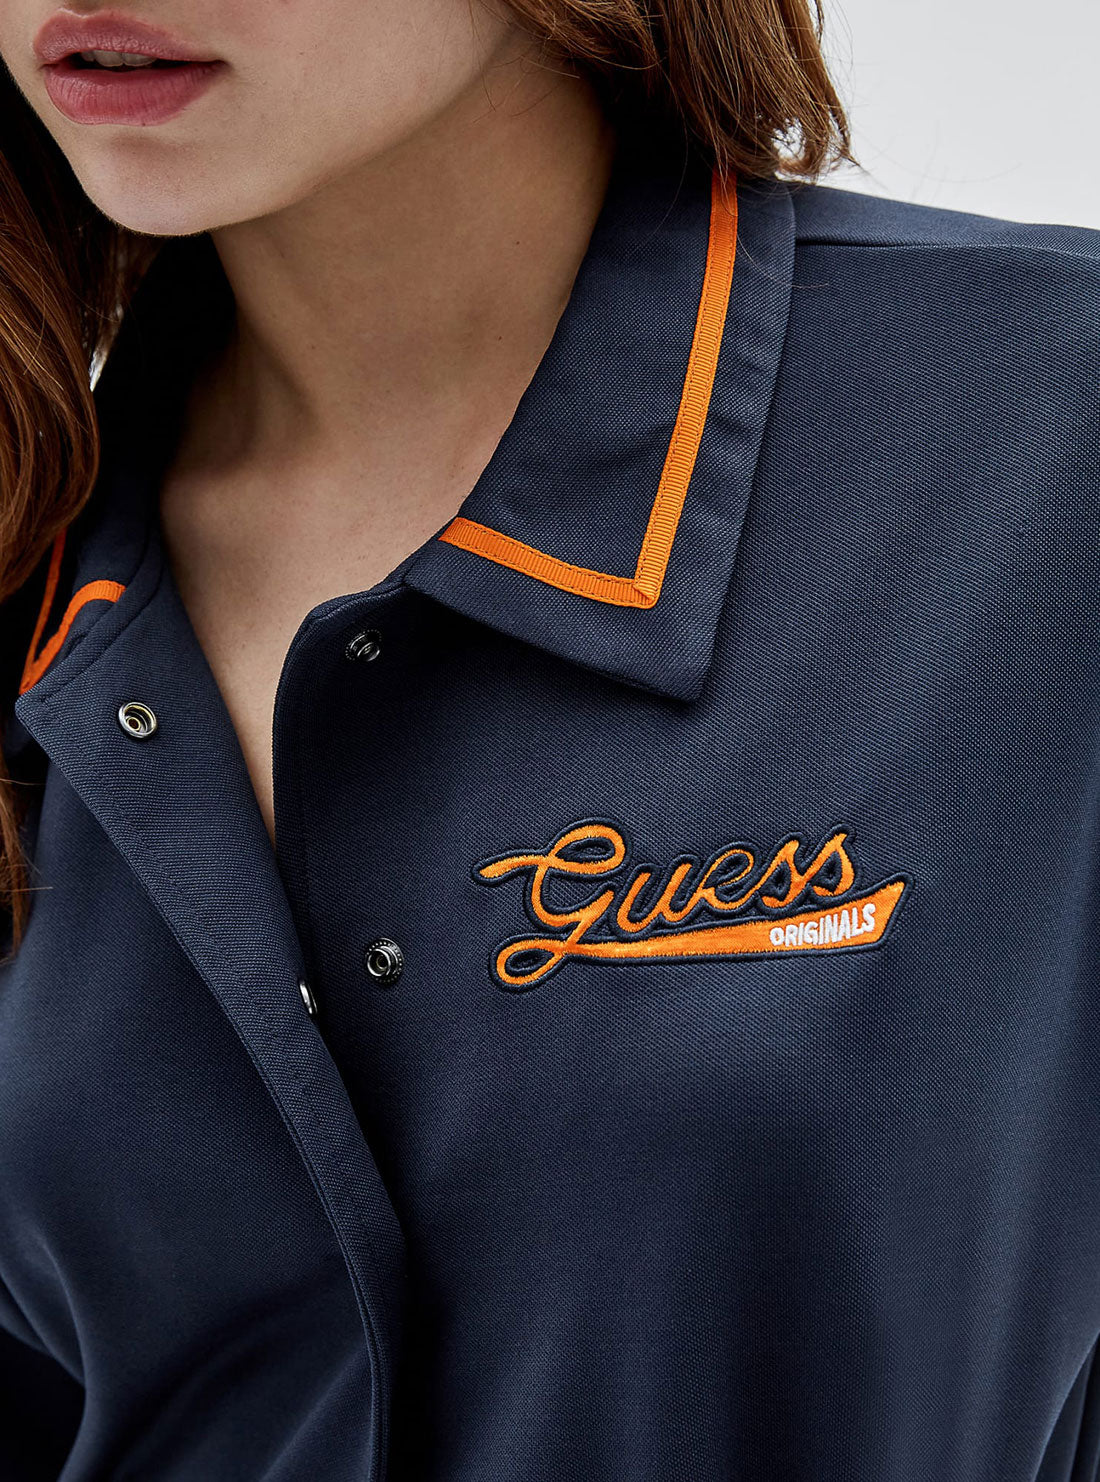 GUESS Women's Guess Originals Navy Virsa Track Shirt W2YP39K7PU0 Detail View